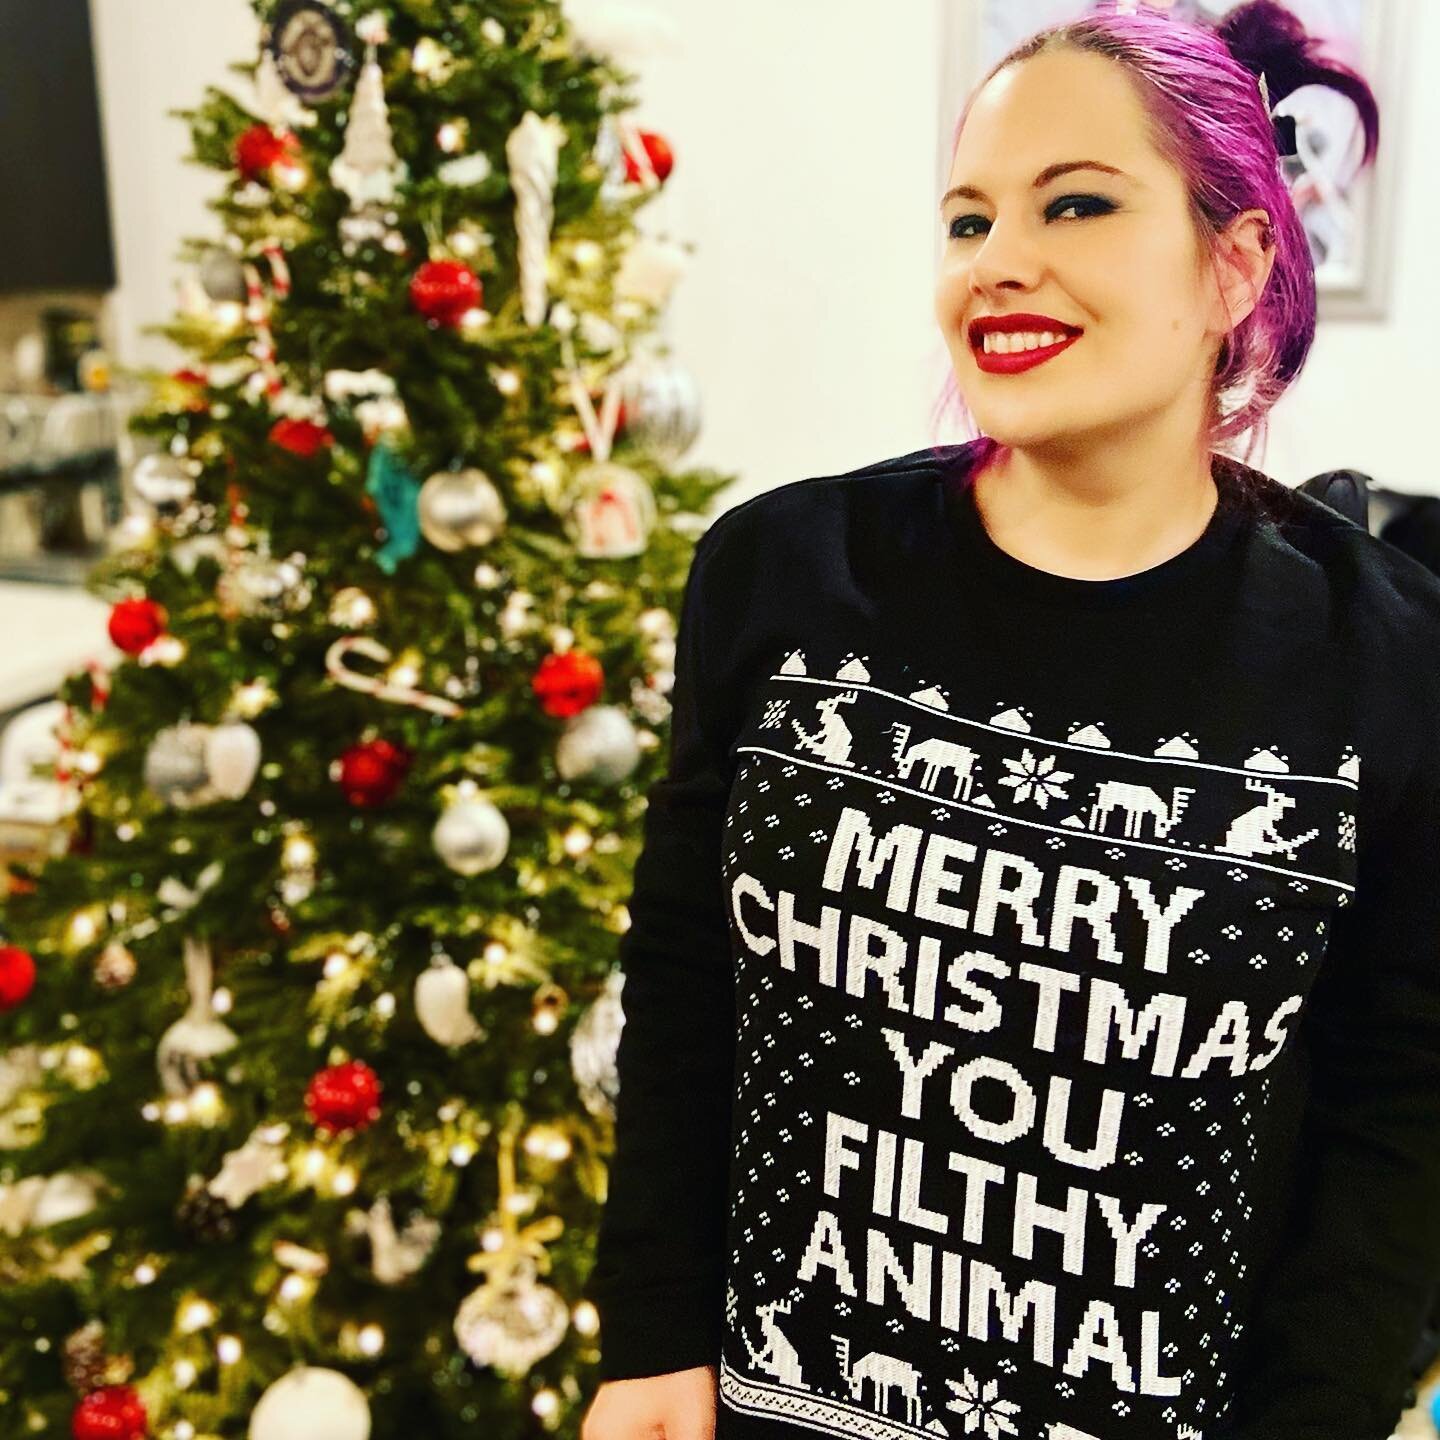 Merry Christmas ya filthy animal

.
.
.
#merrychristmas #merrychristmas🎄 #merrychristmas2020 #christmastree #christmas #uglychristmassweater #uglysweater #xmas #christmastime #sweaterweather #happyholidays #sweater #holidays #christmasspirit #holida